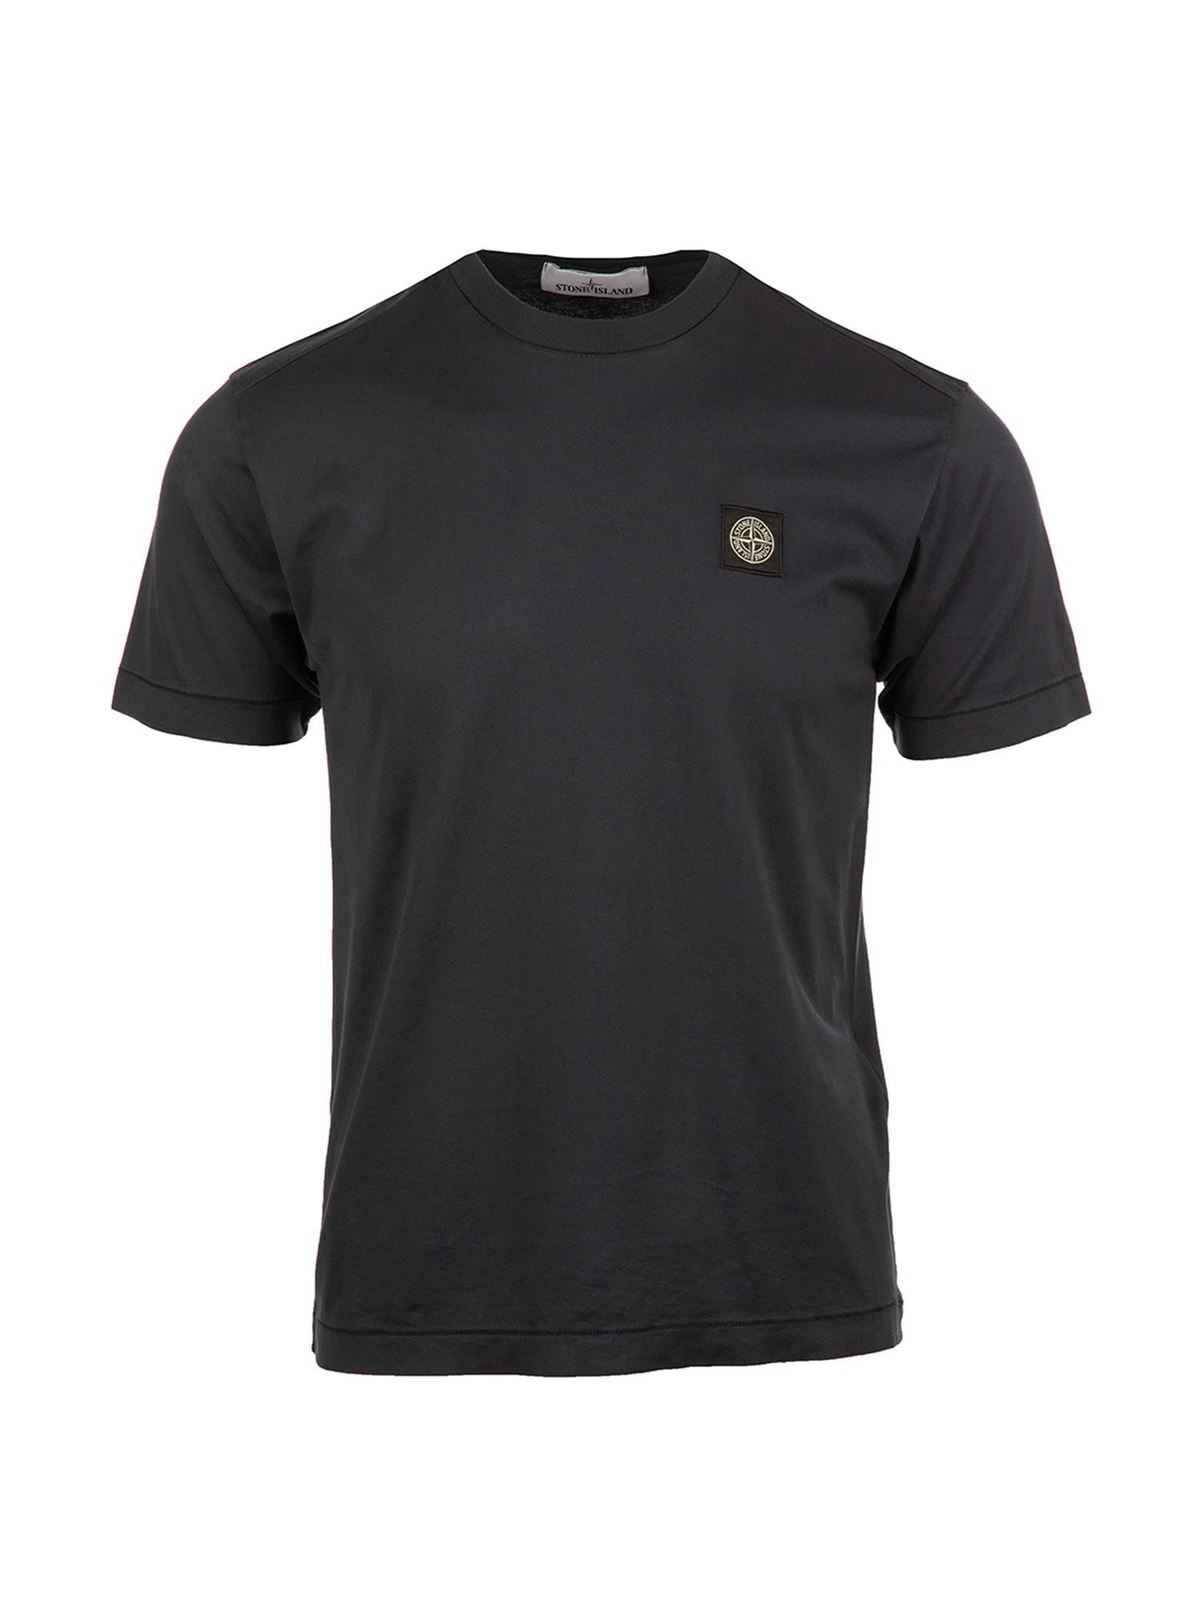 Stone Island - Crewneck T-shirt in black - t-shirts - 751524113V0026